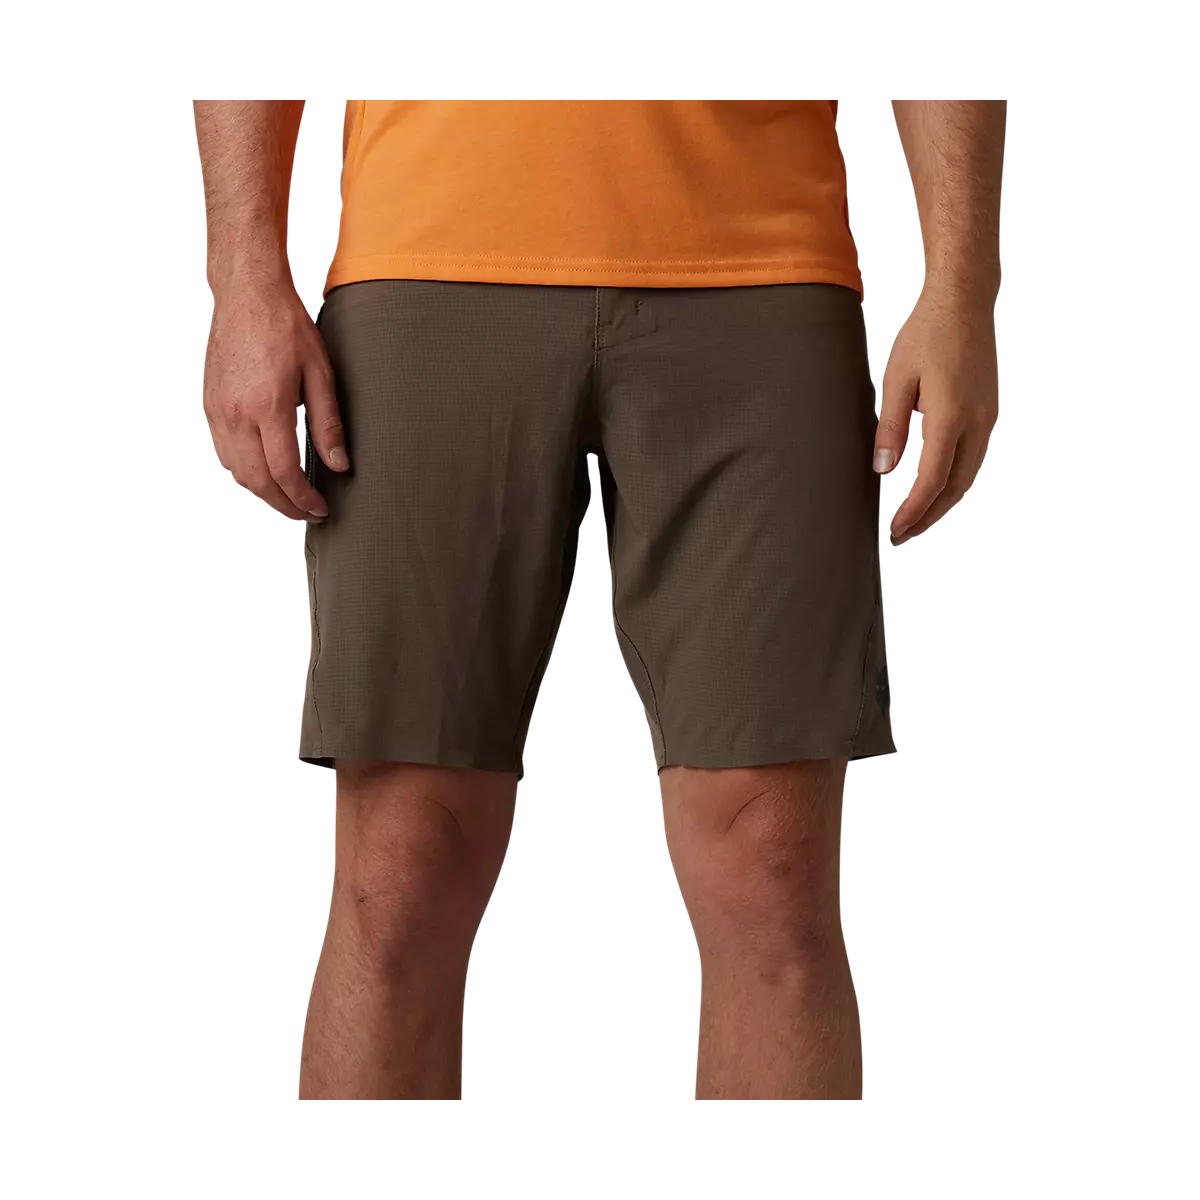 Pantalón corto Fox Flexair Ascent en color negro con badana extraible de tallaje estrecho 30652-117